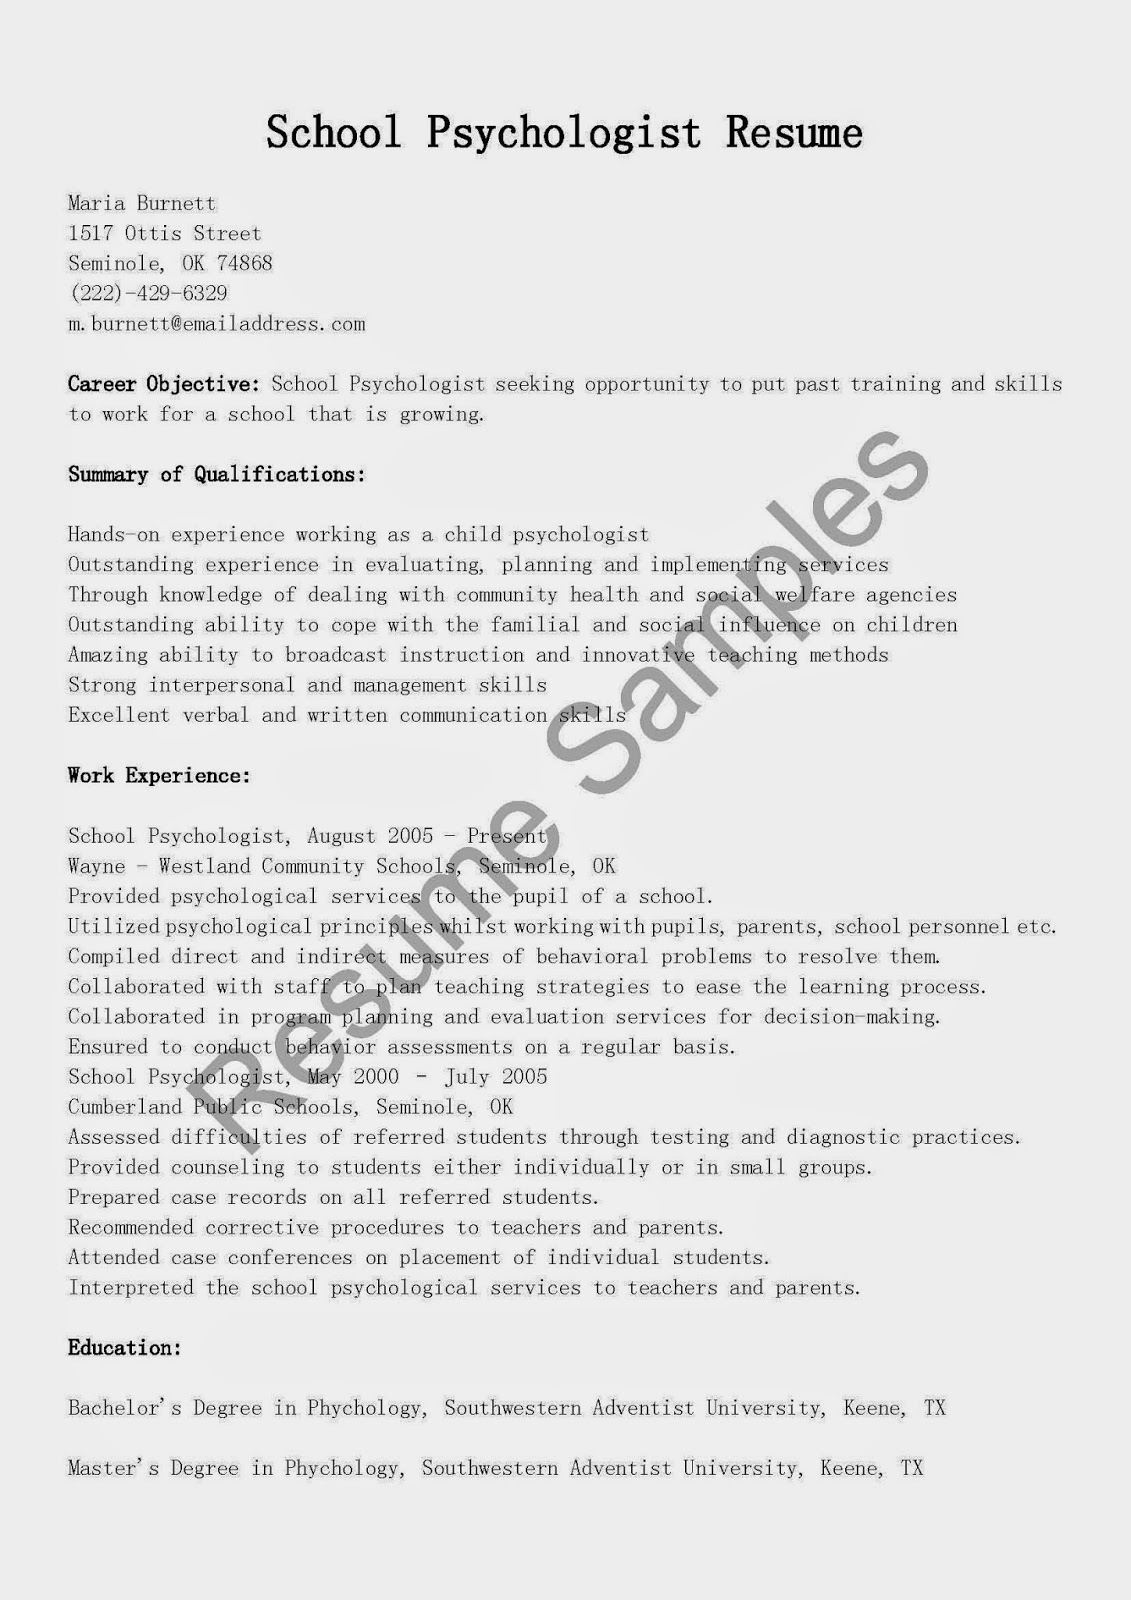 Psych graduate resume